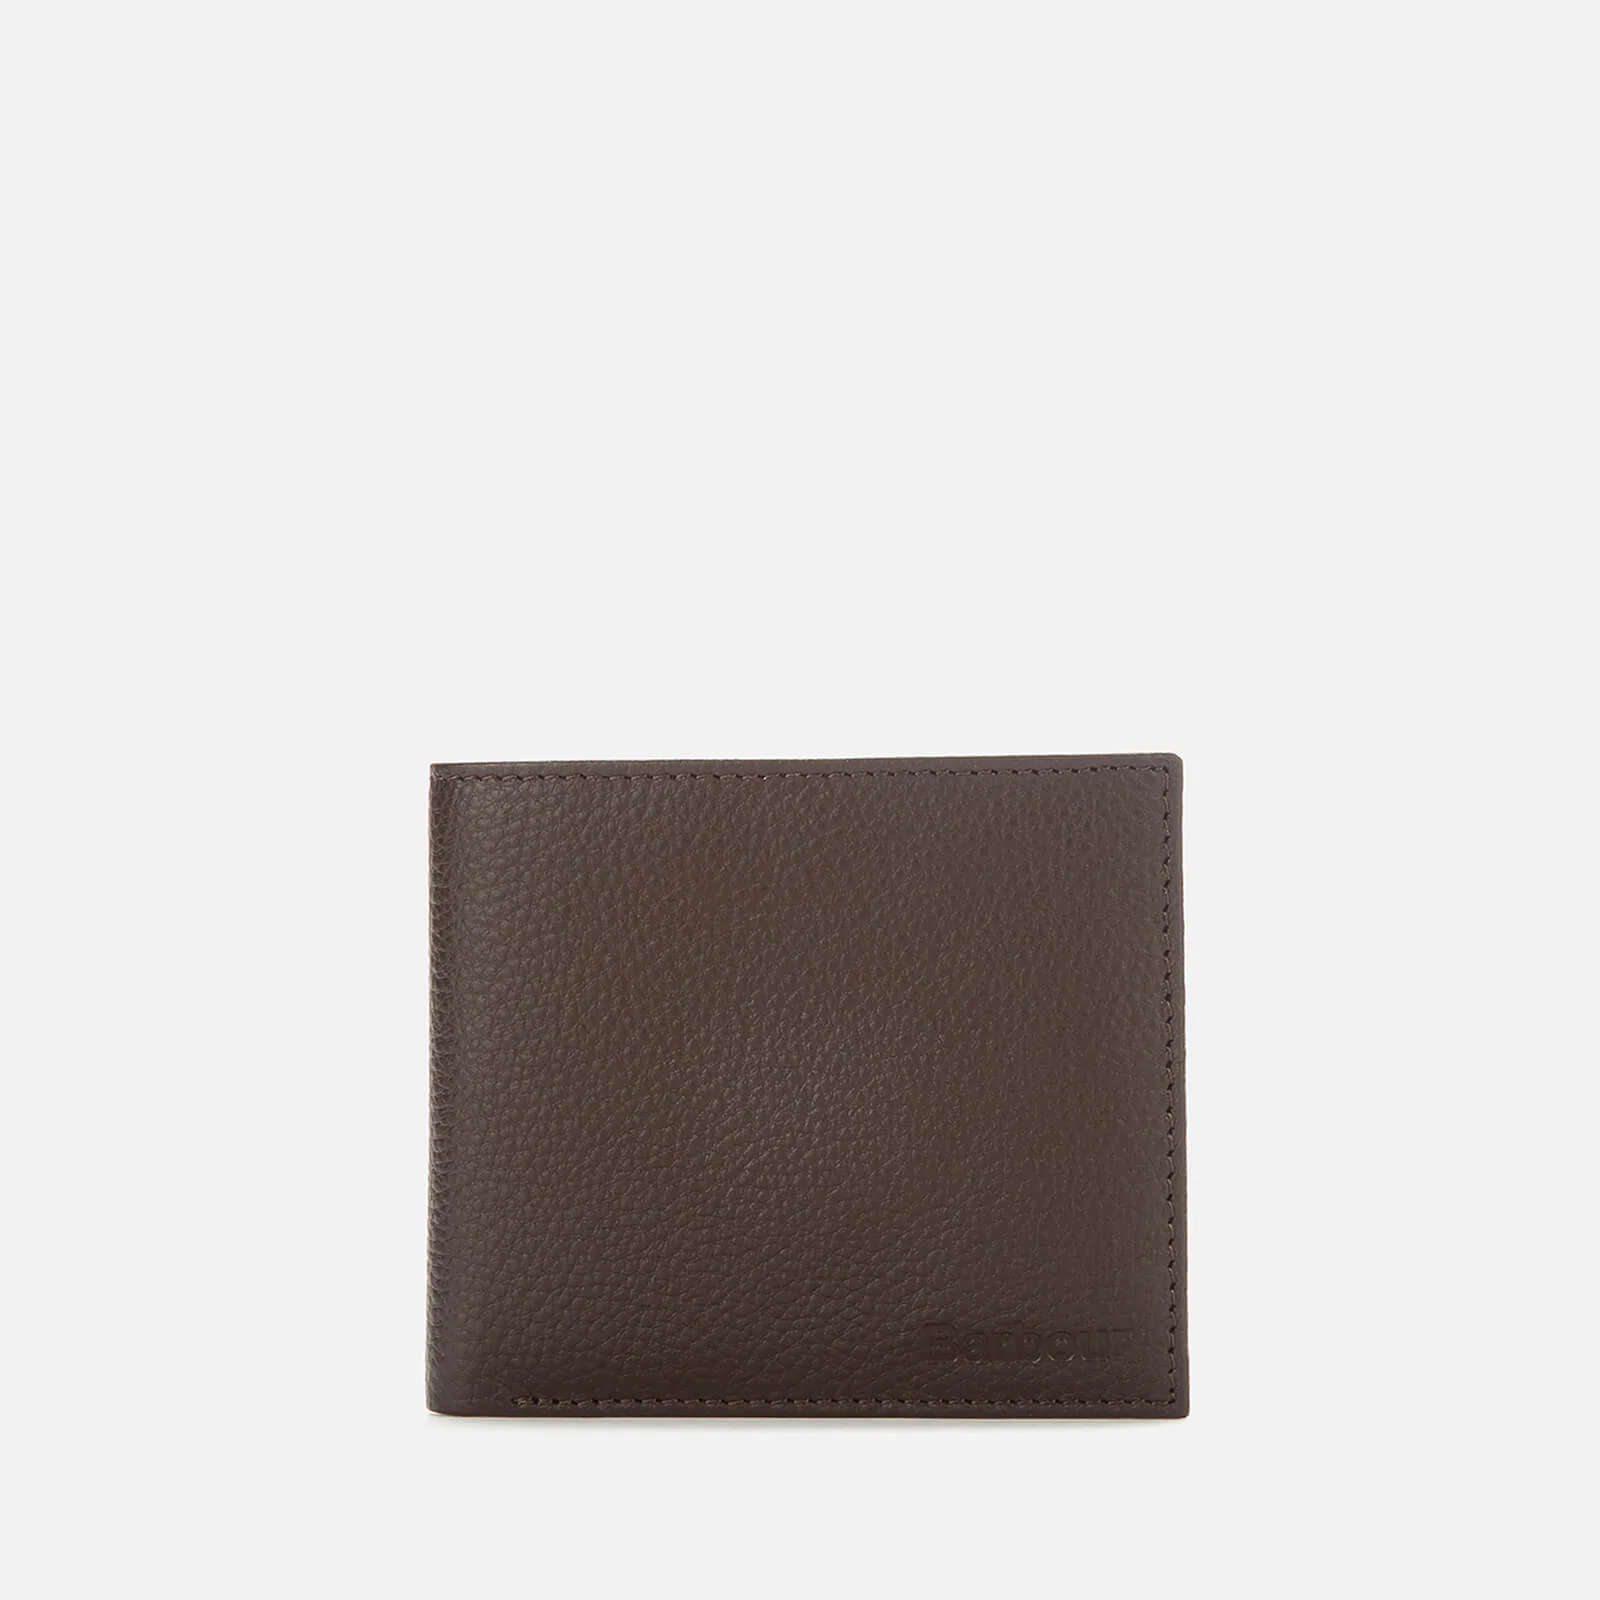 Barbour Heritage Men's Amble Leather Billfold Wallet - Dark Brown Image 1